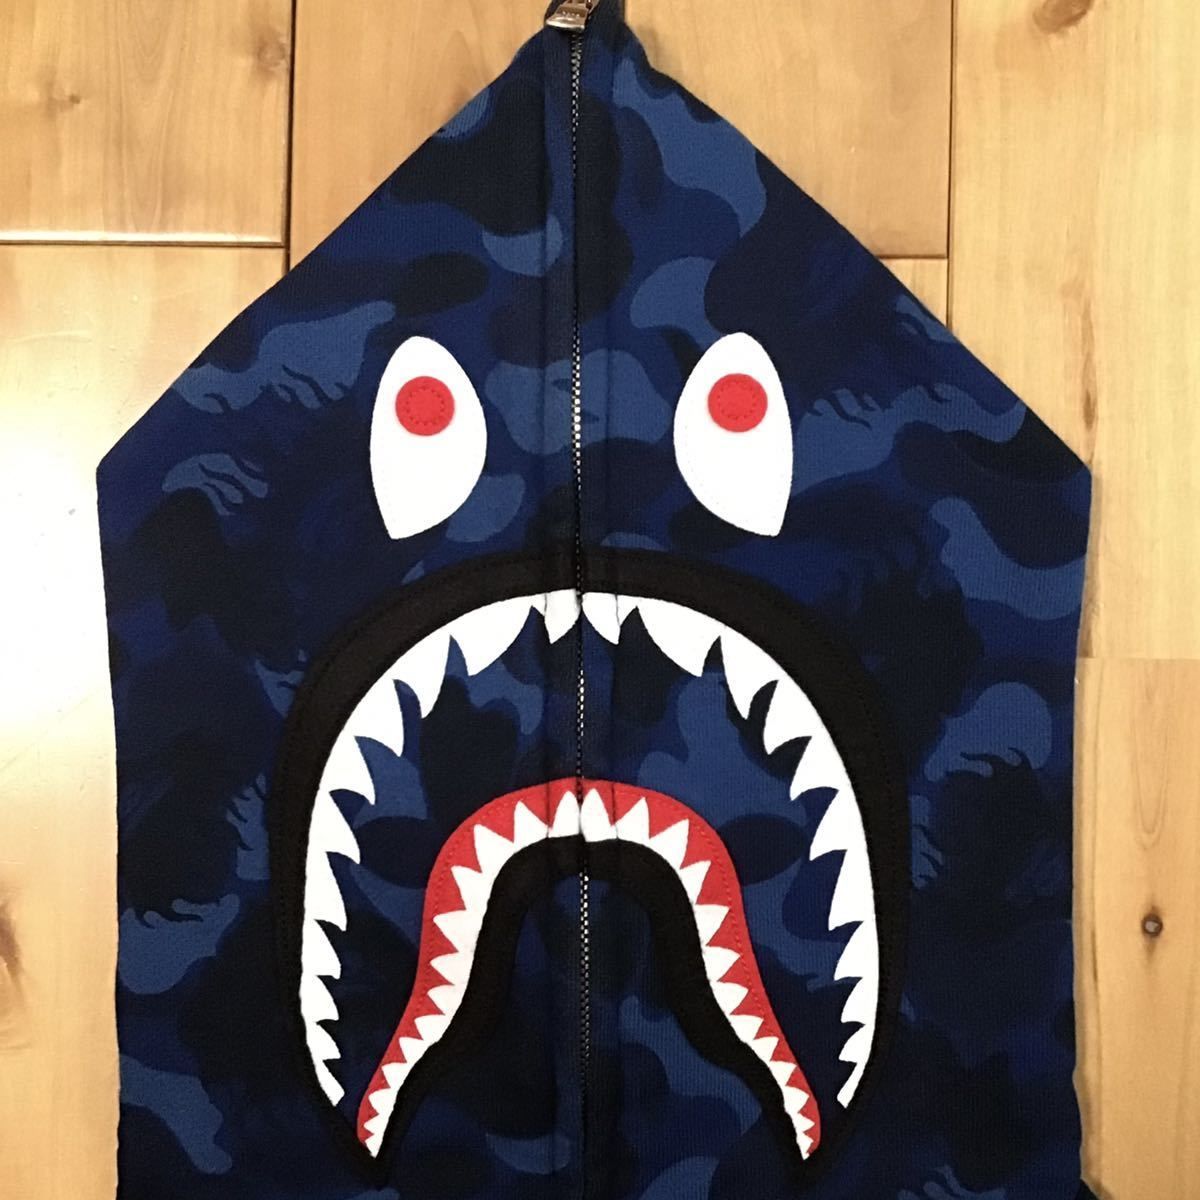 Fire camo シャーク パーカー shark full zip hoodie a bathing ape